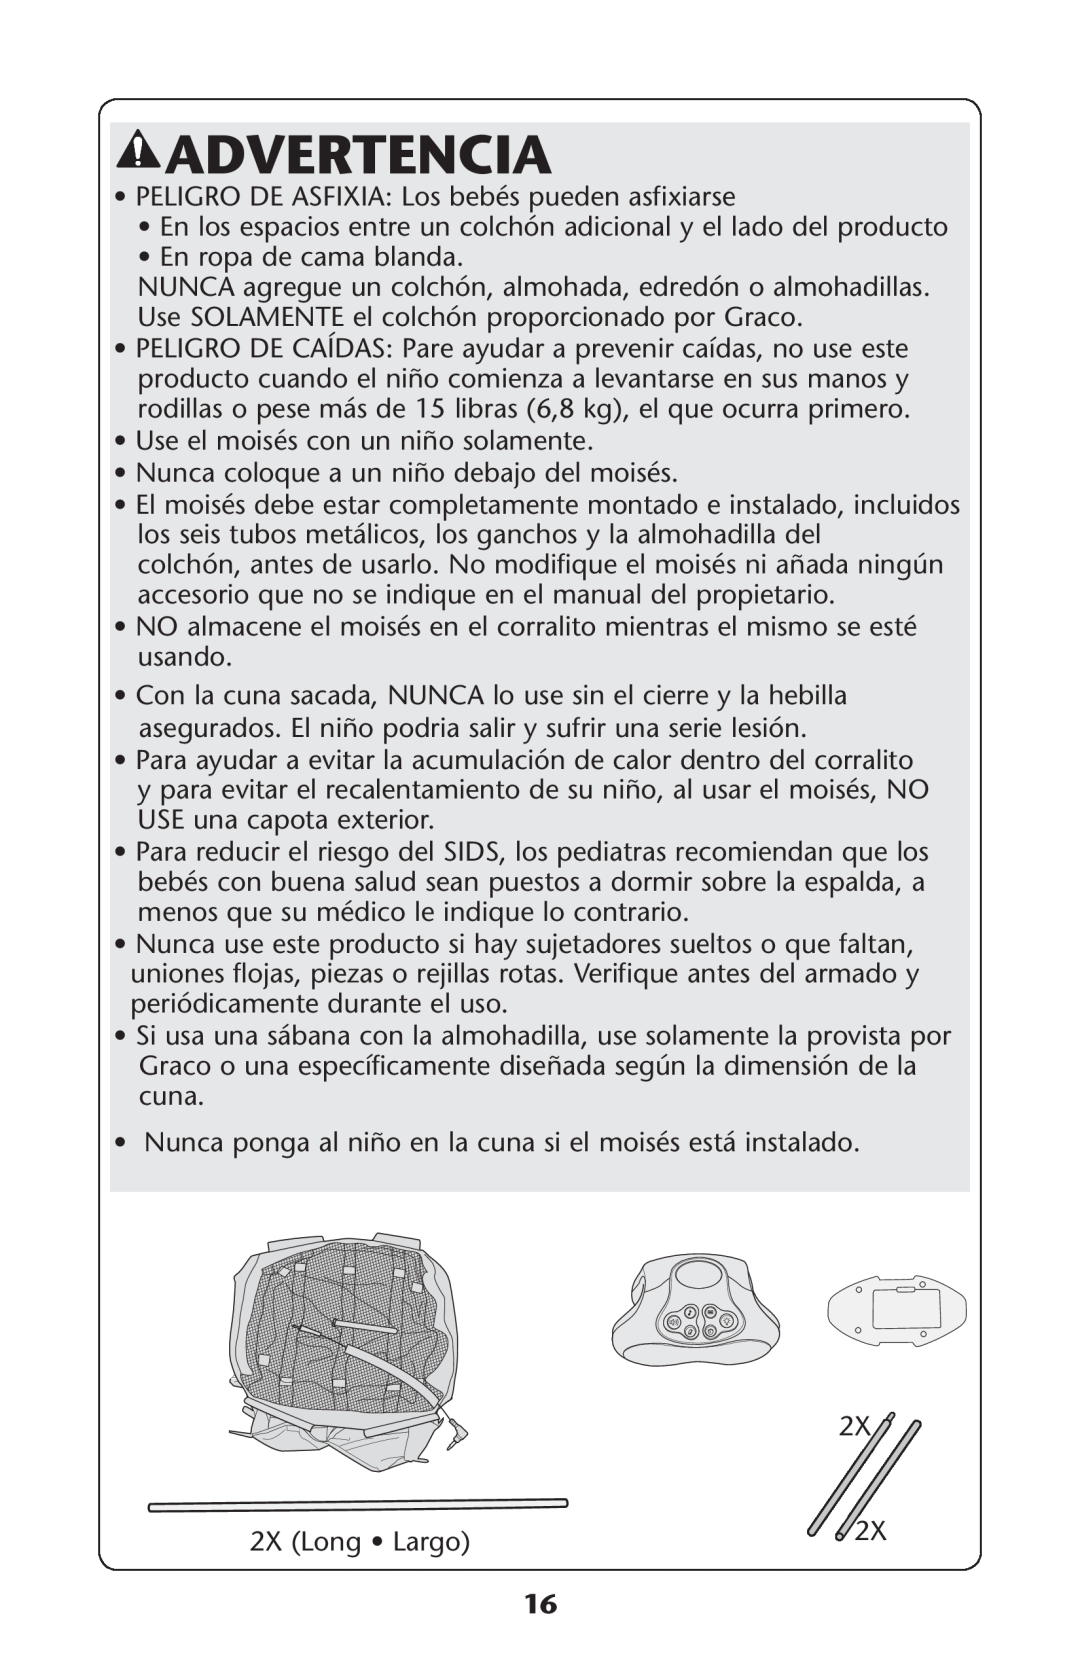 Graco PD187207A 9/11 owner manual Advertencia, ss0%,2/$% !3&8! ,OSOBEBÏSBPUEDEN ASFIXIARSE, 8 ,ONGOss,ARGO 